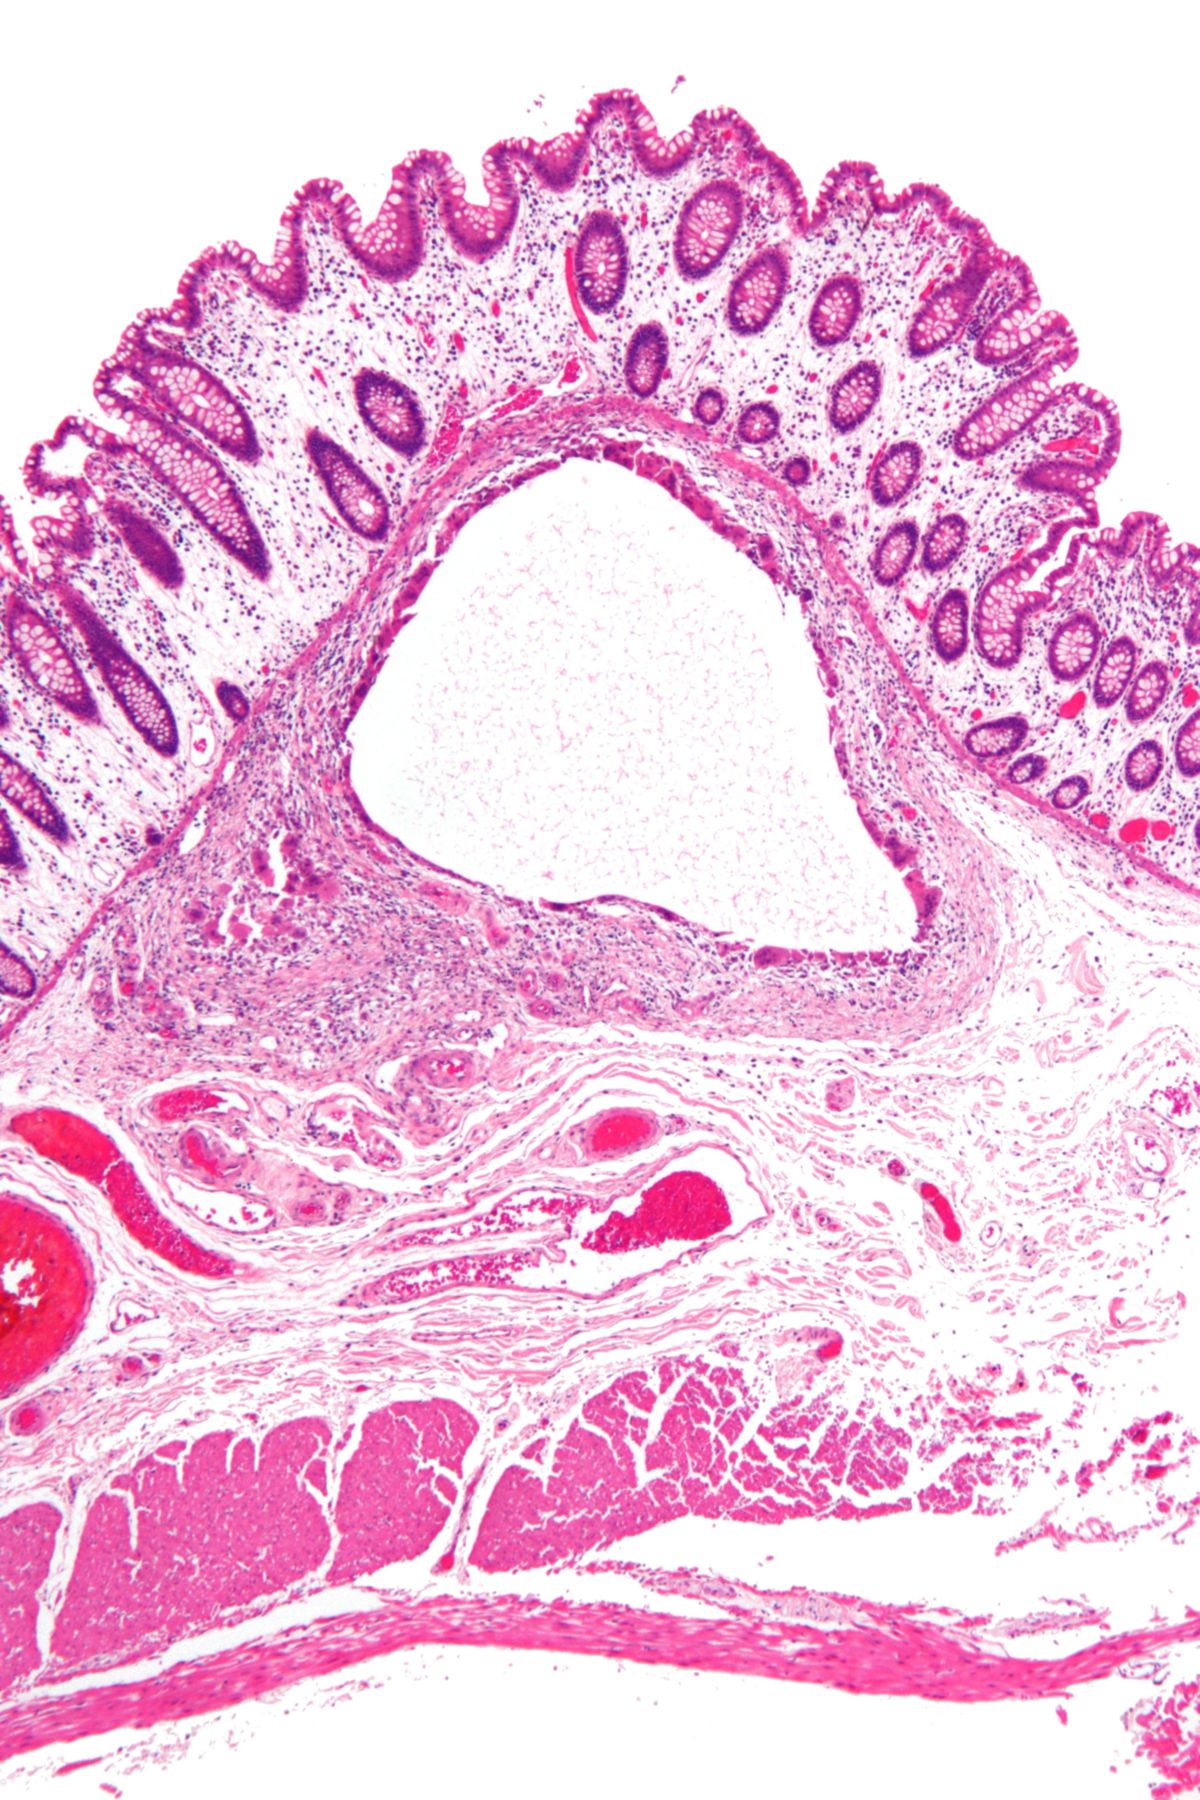 Pneumatosis cystoides intestinalis (Histologie)